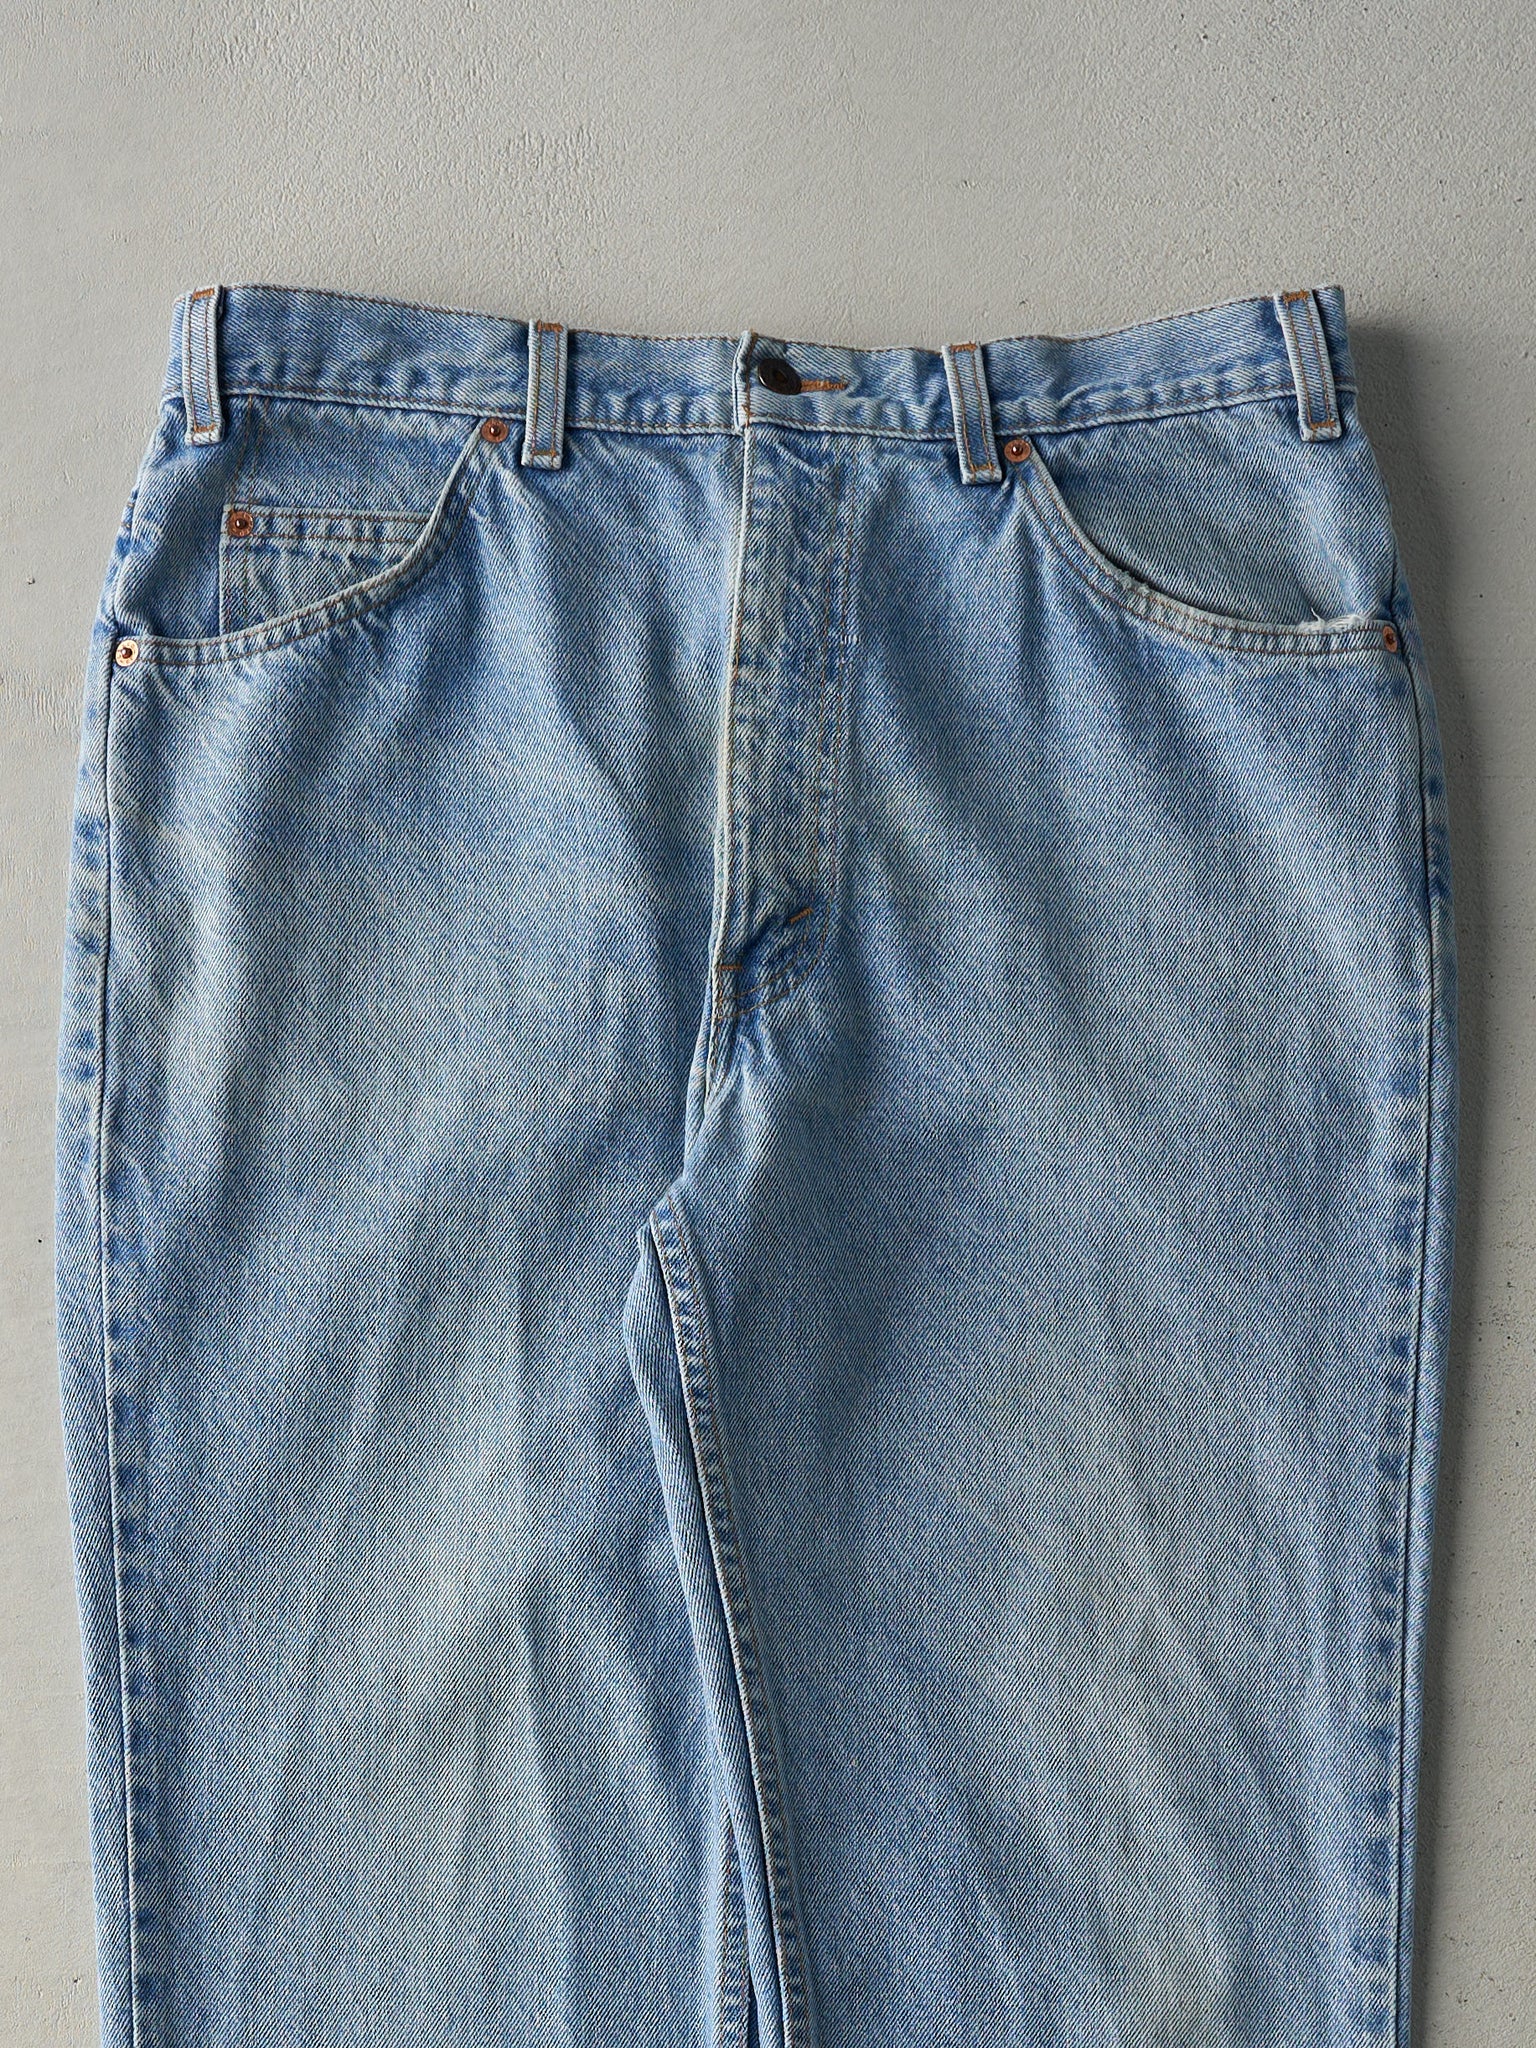 Vintage 80s Light Wash Orange Tab Levi's Jeans (34x29)